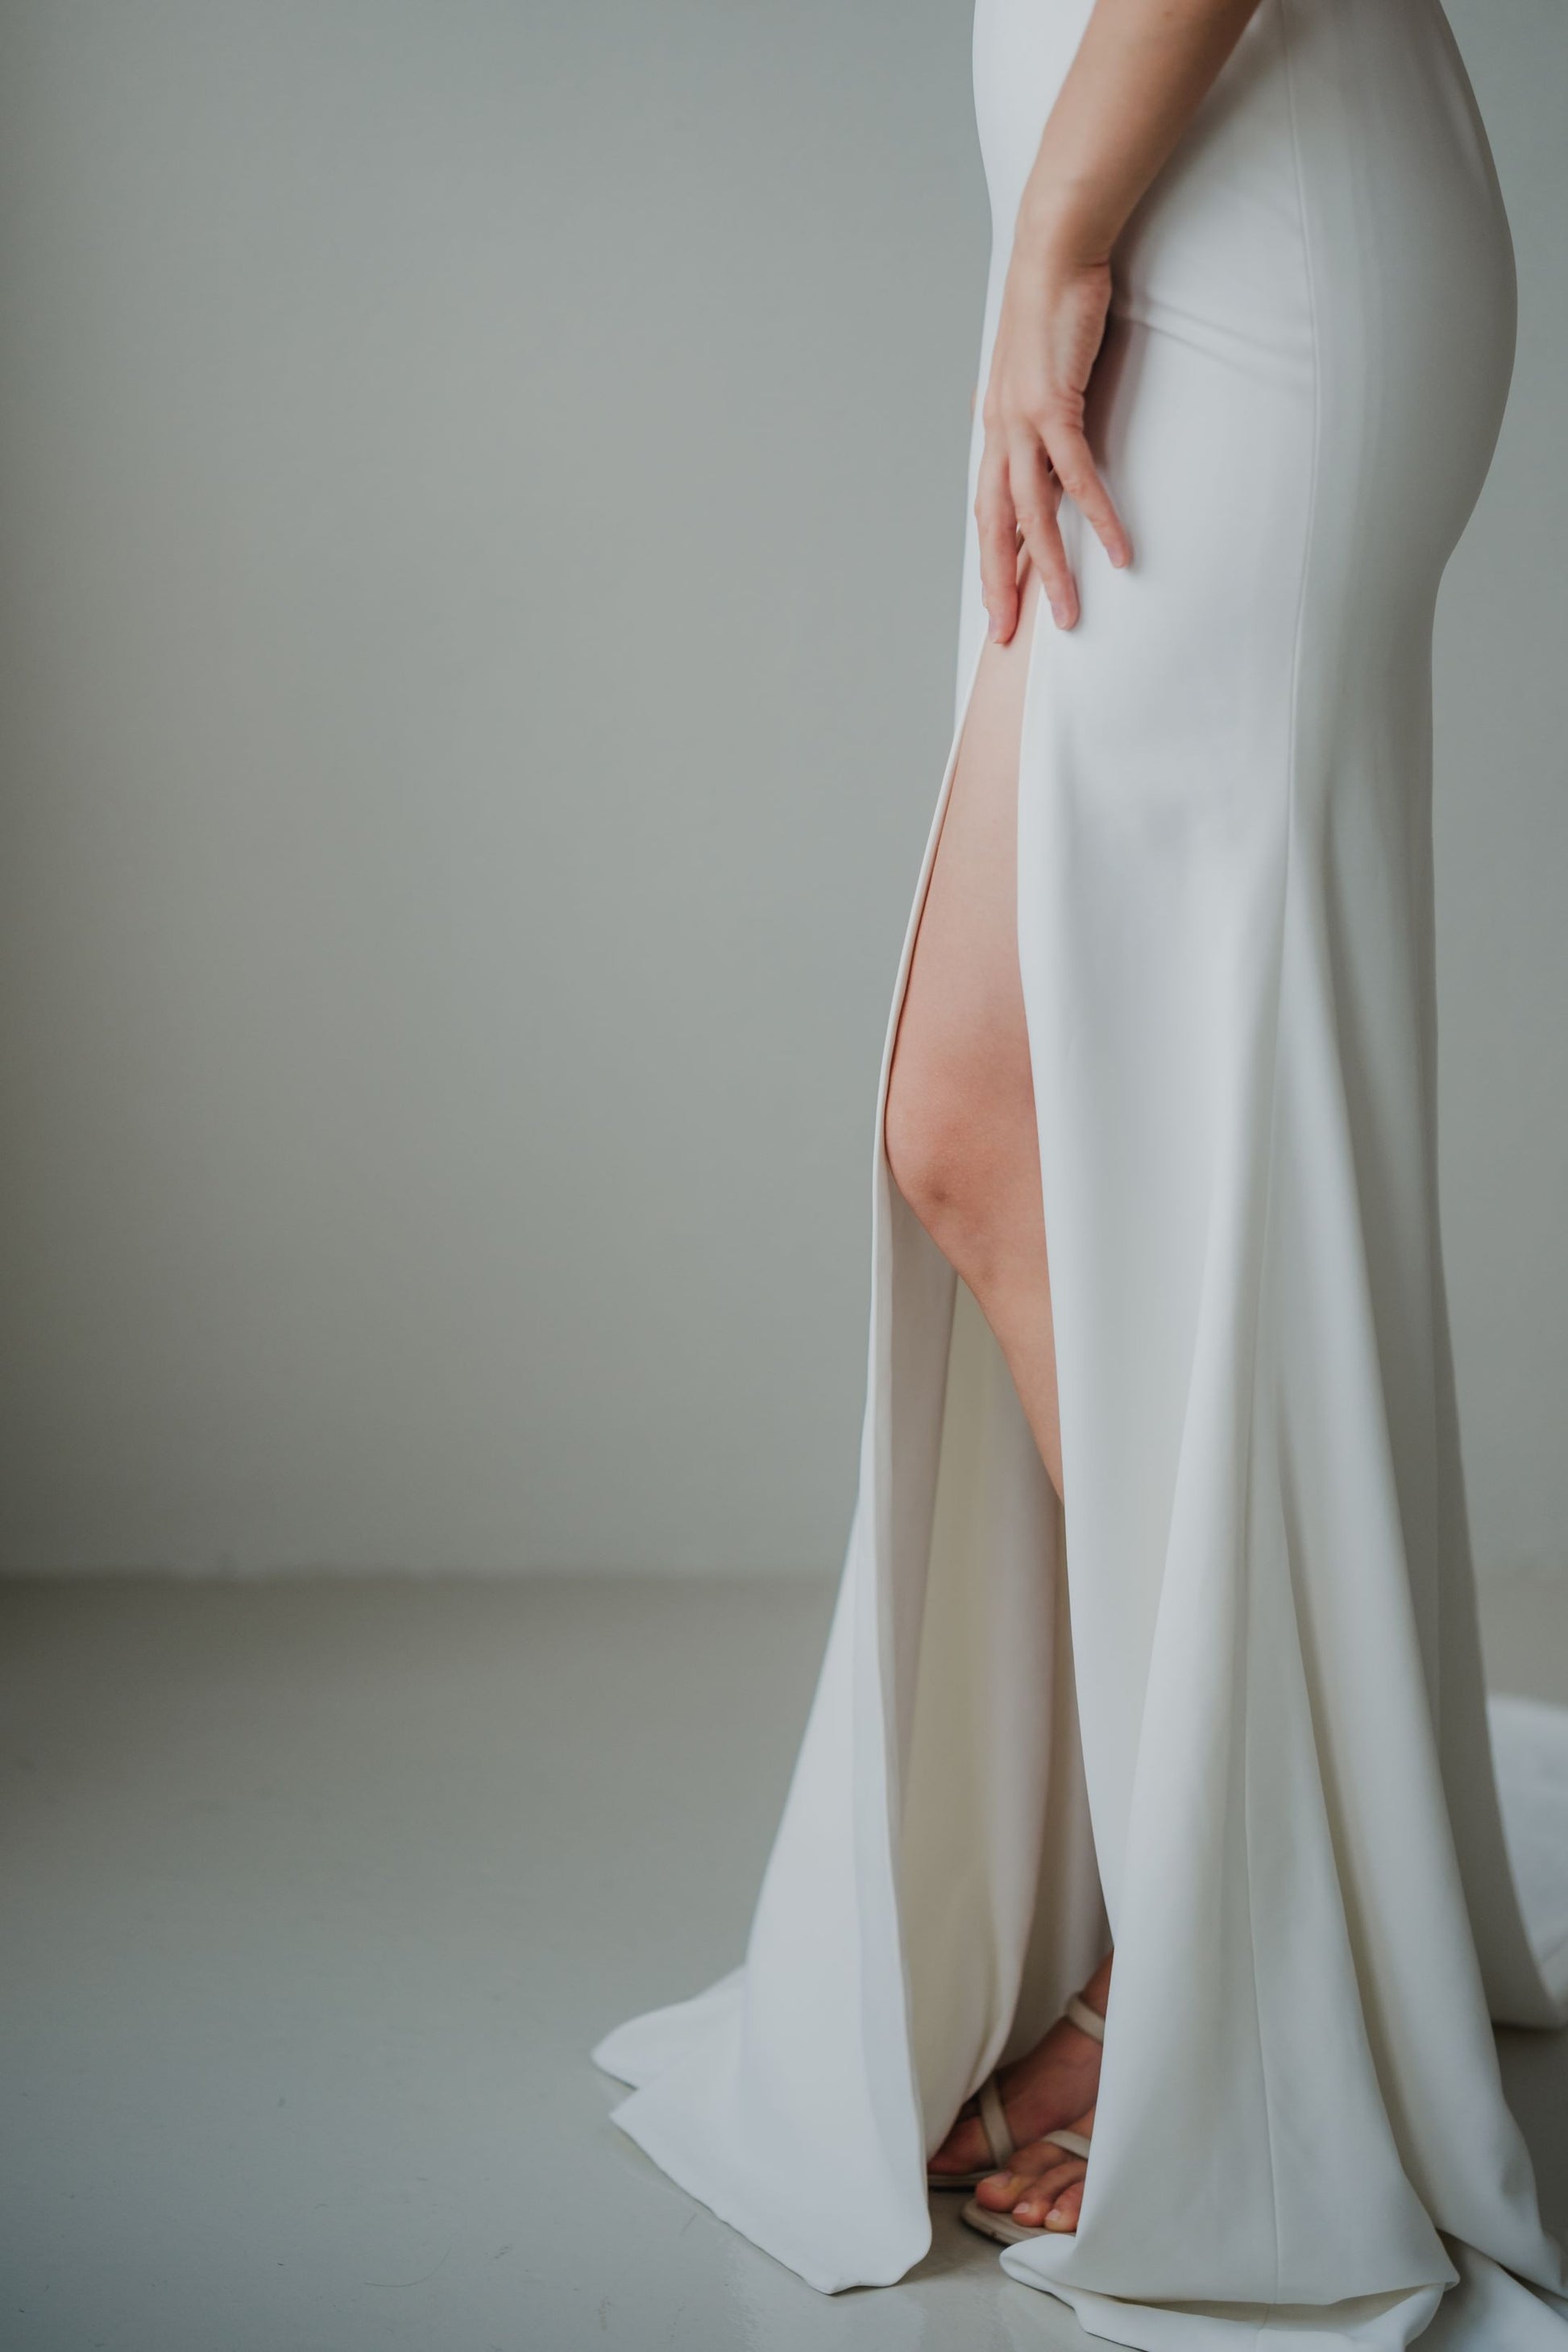 Yvette Plunging V-neck Short Cap Sleeves Minimal Wedding Dress | Low V back with Nude Mesh Column Sheath Skirt | Bone & Grey Bridal